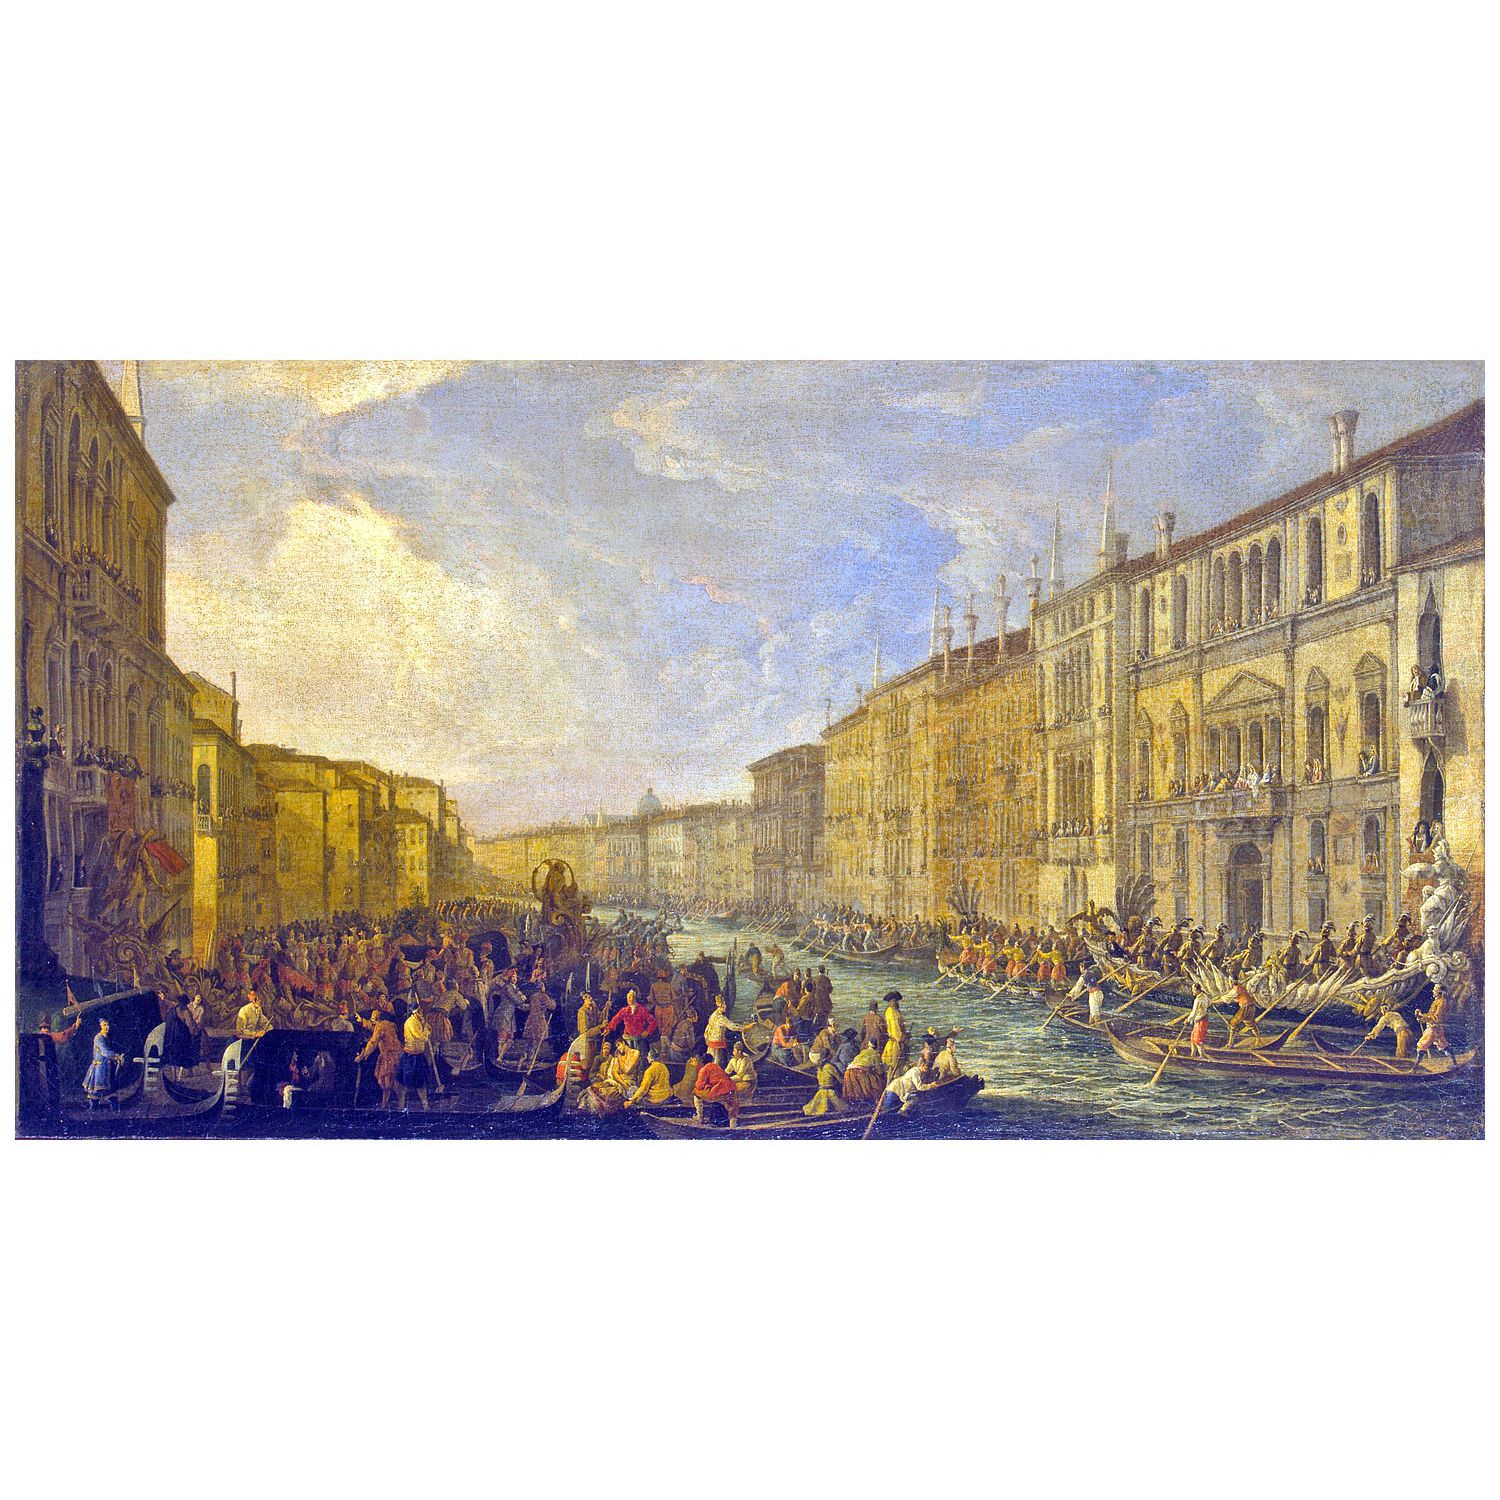 Luca Carlevarijs. Regata sul Canal Grande. 1710. Hermitage Museum